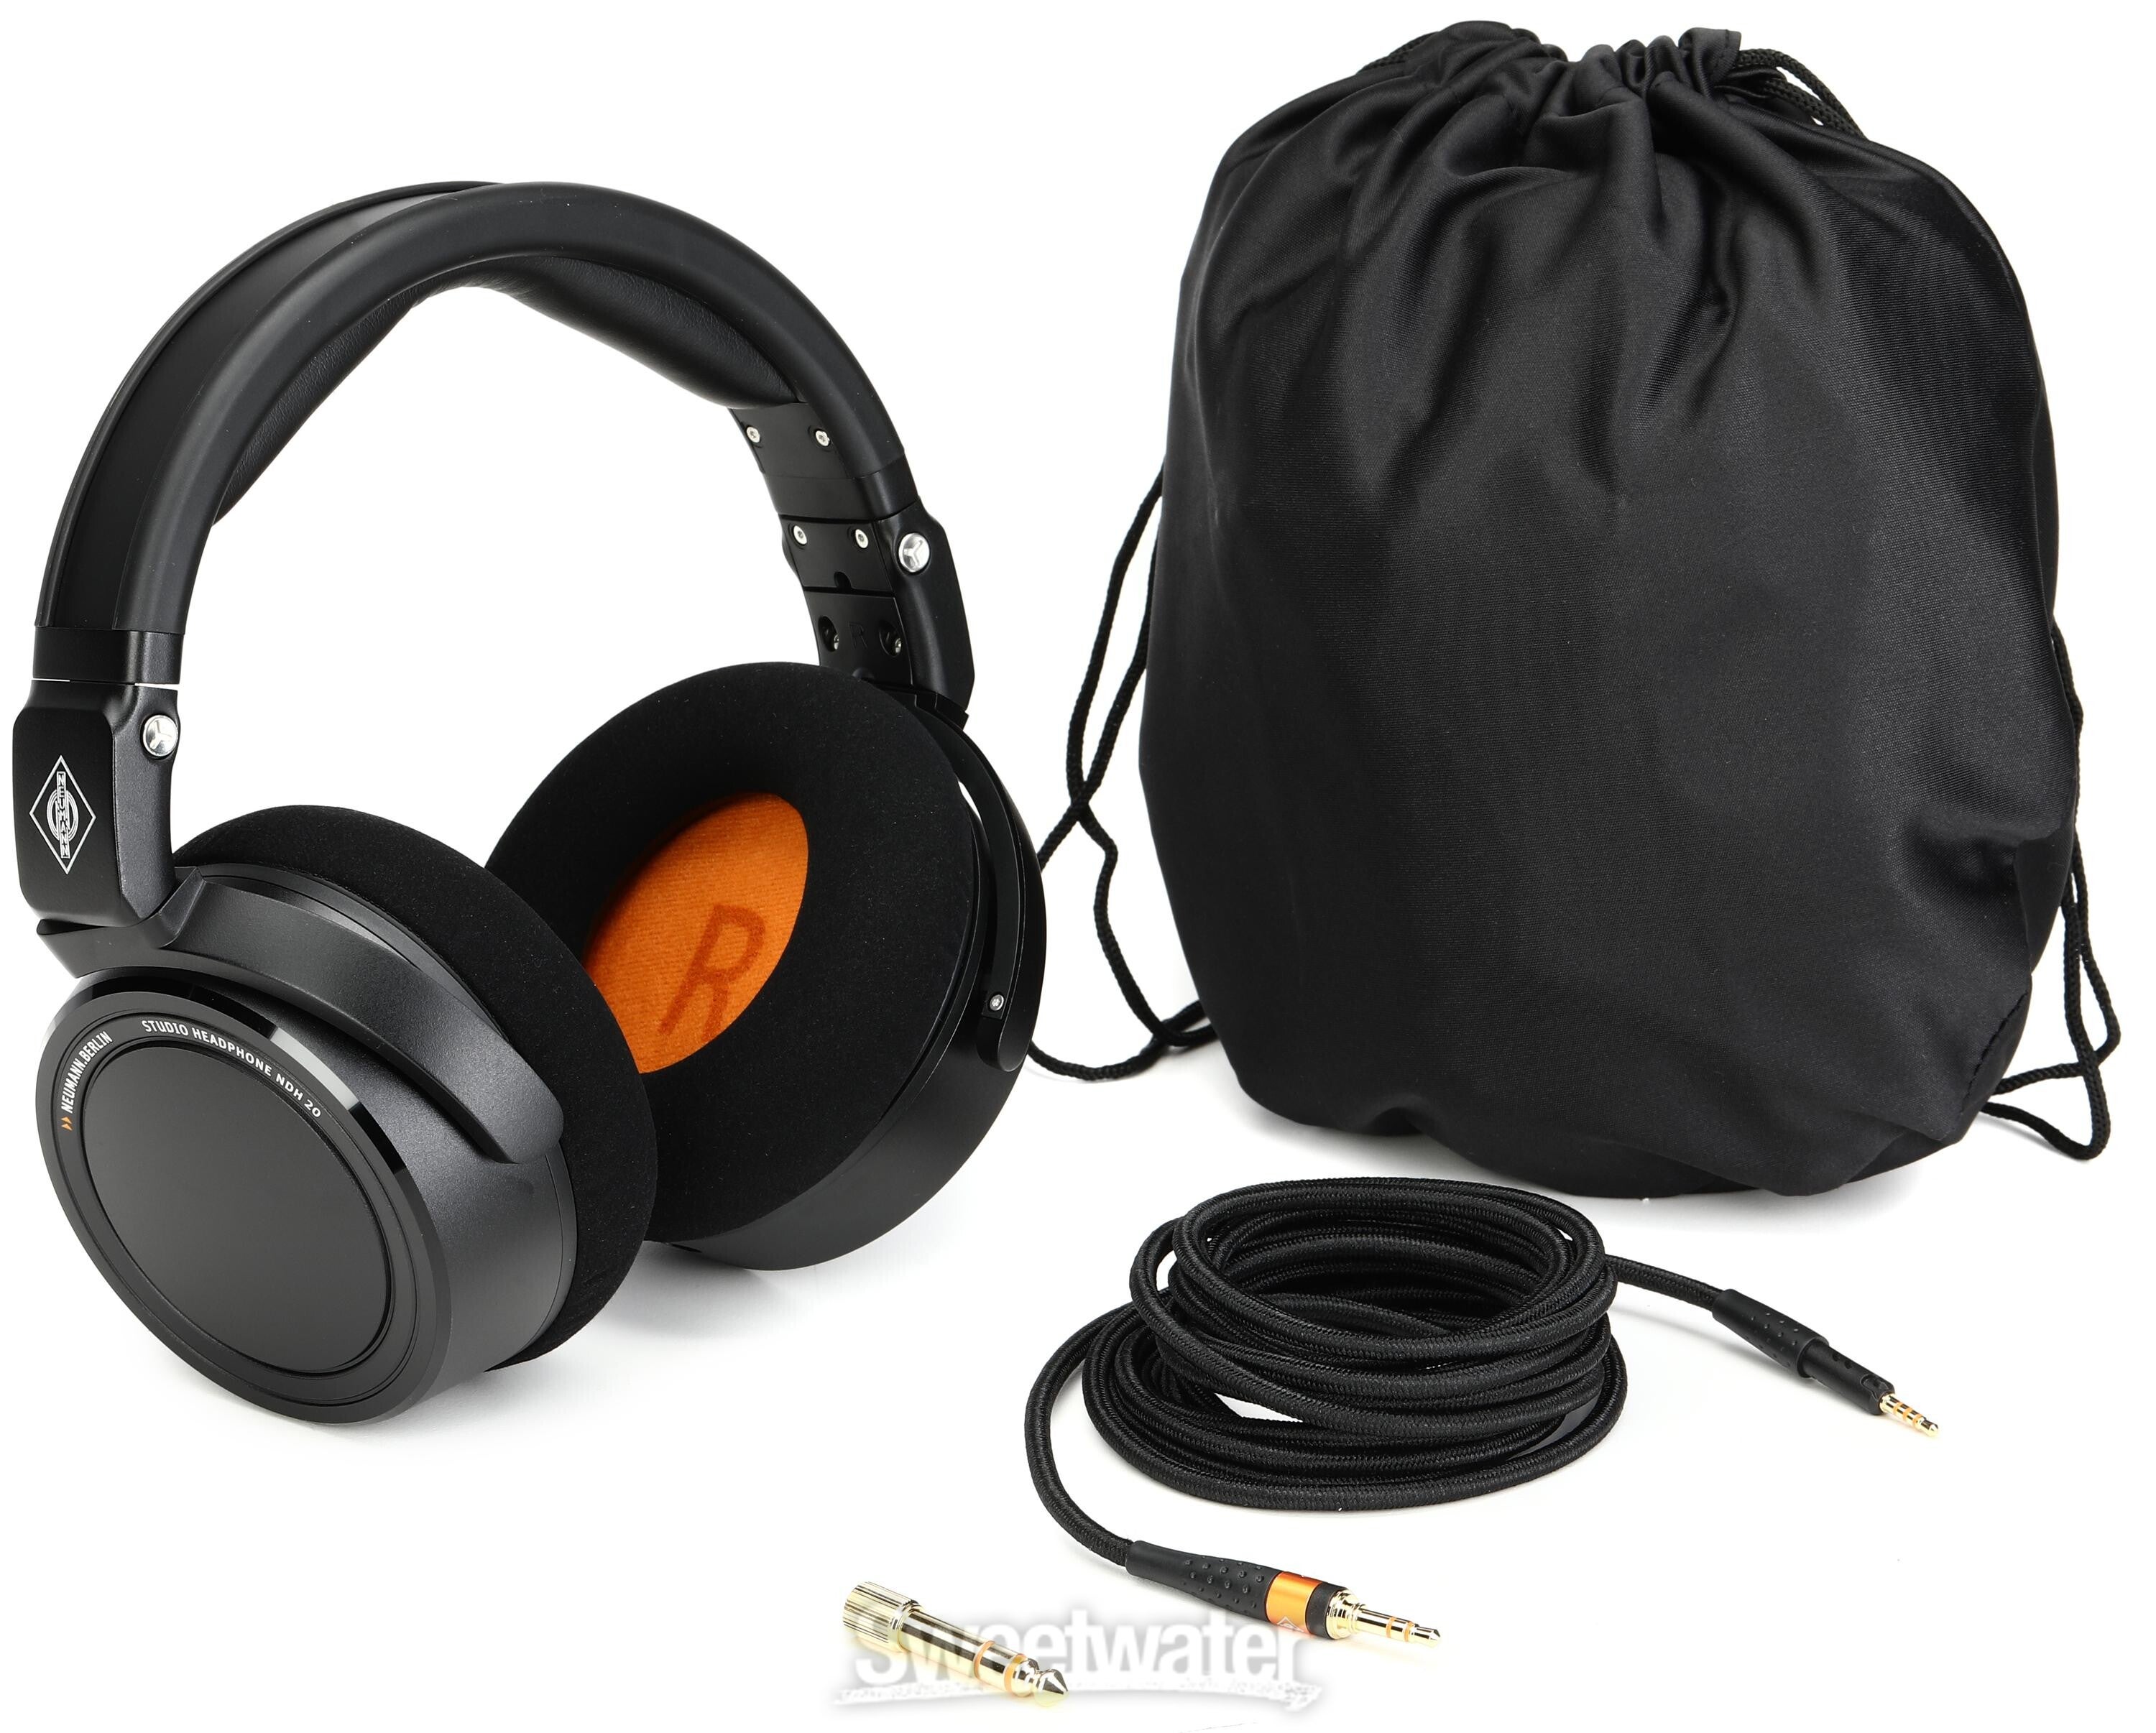 Neumann NDH 20 Closed-back Studio Headphones - Black Edition